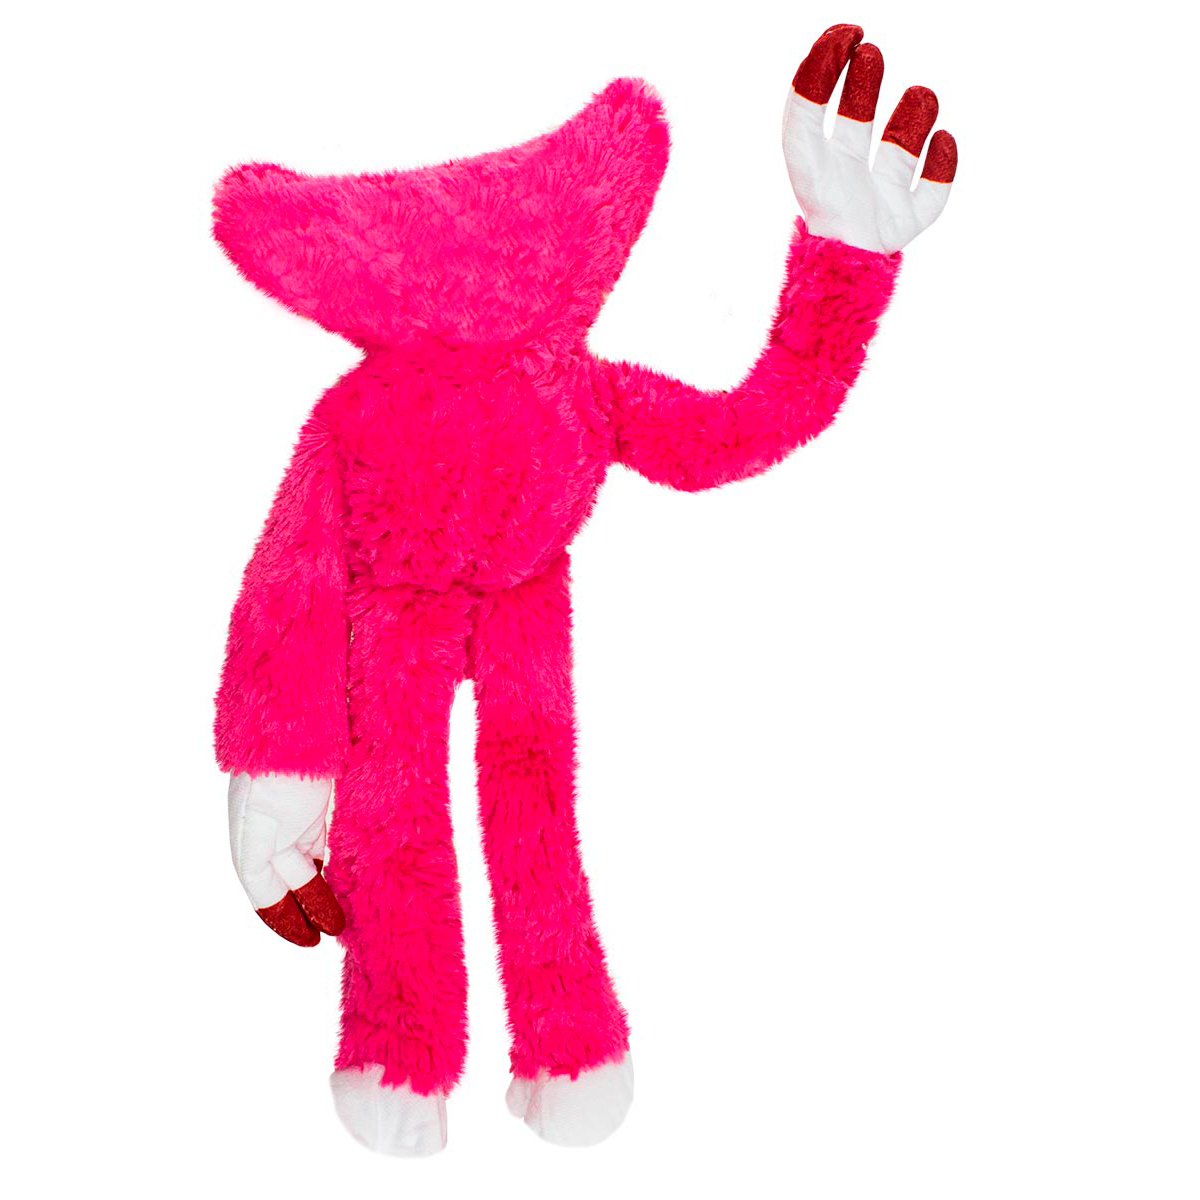 Мягкая игрушка Михи-Михи huggy Wuggy Кисси Мисси розовый 40см - фото 2